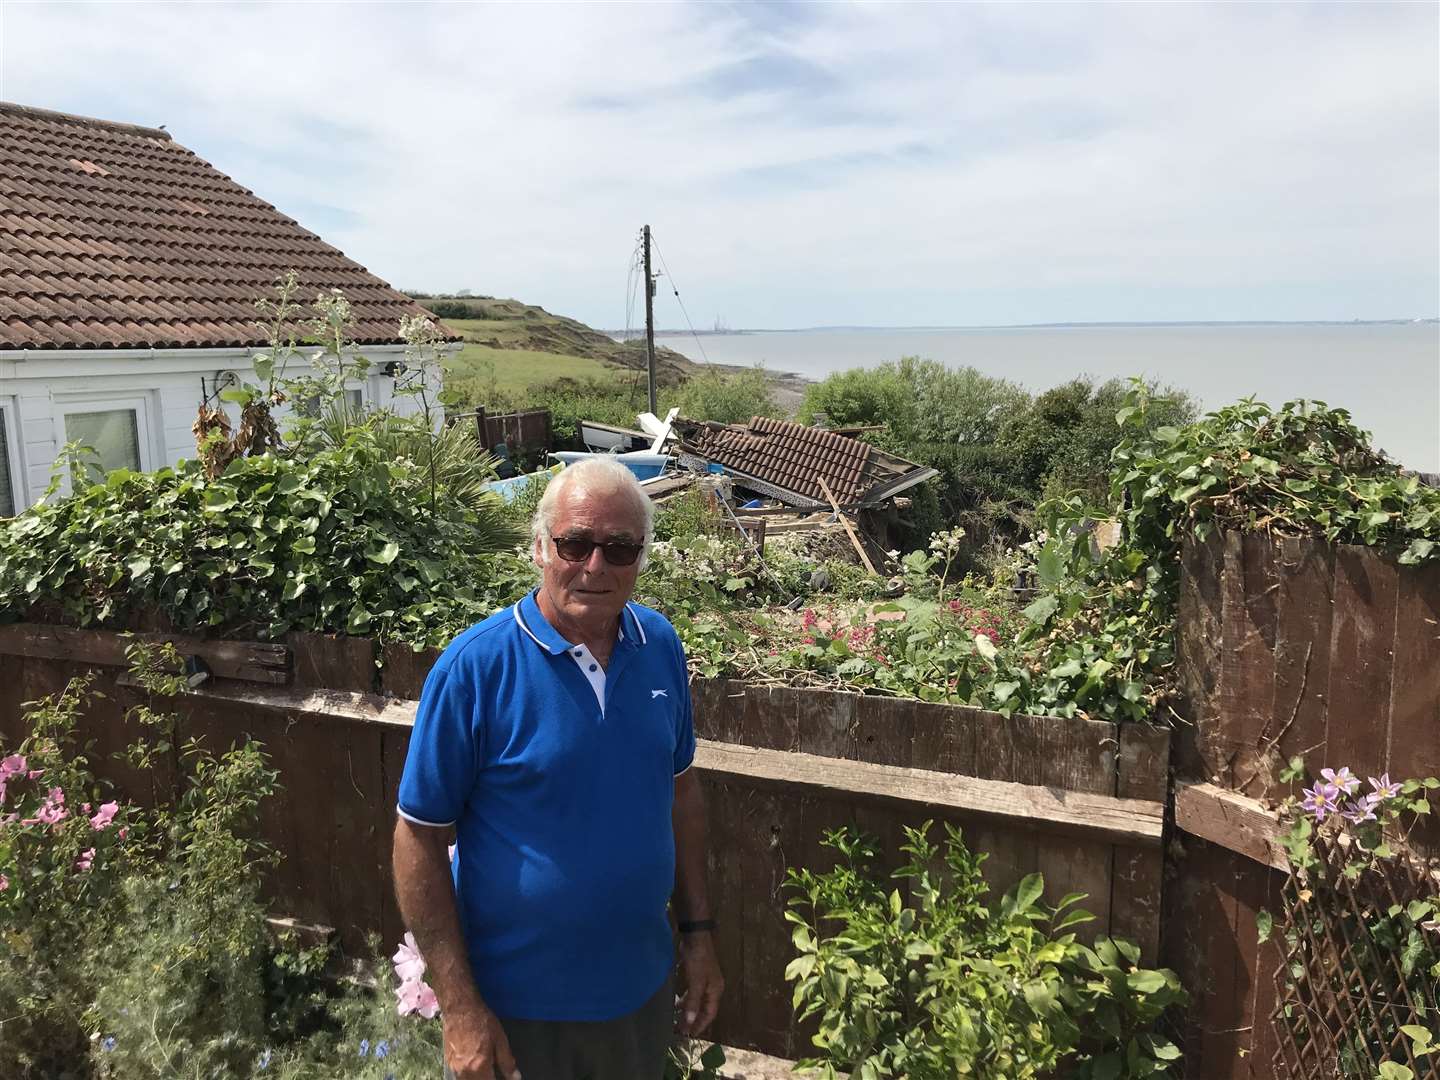 Edd Cane in his back garden in June 2020